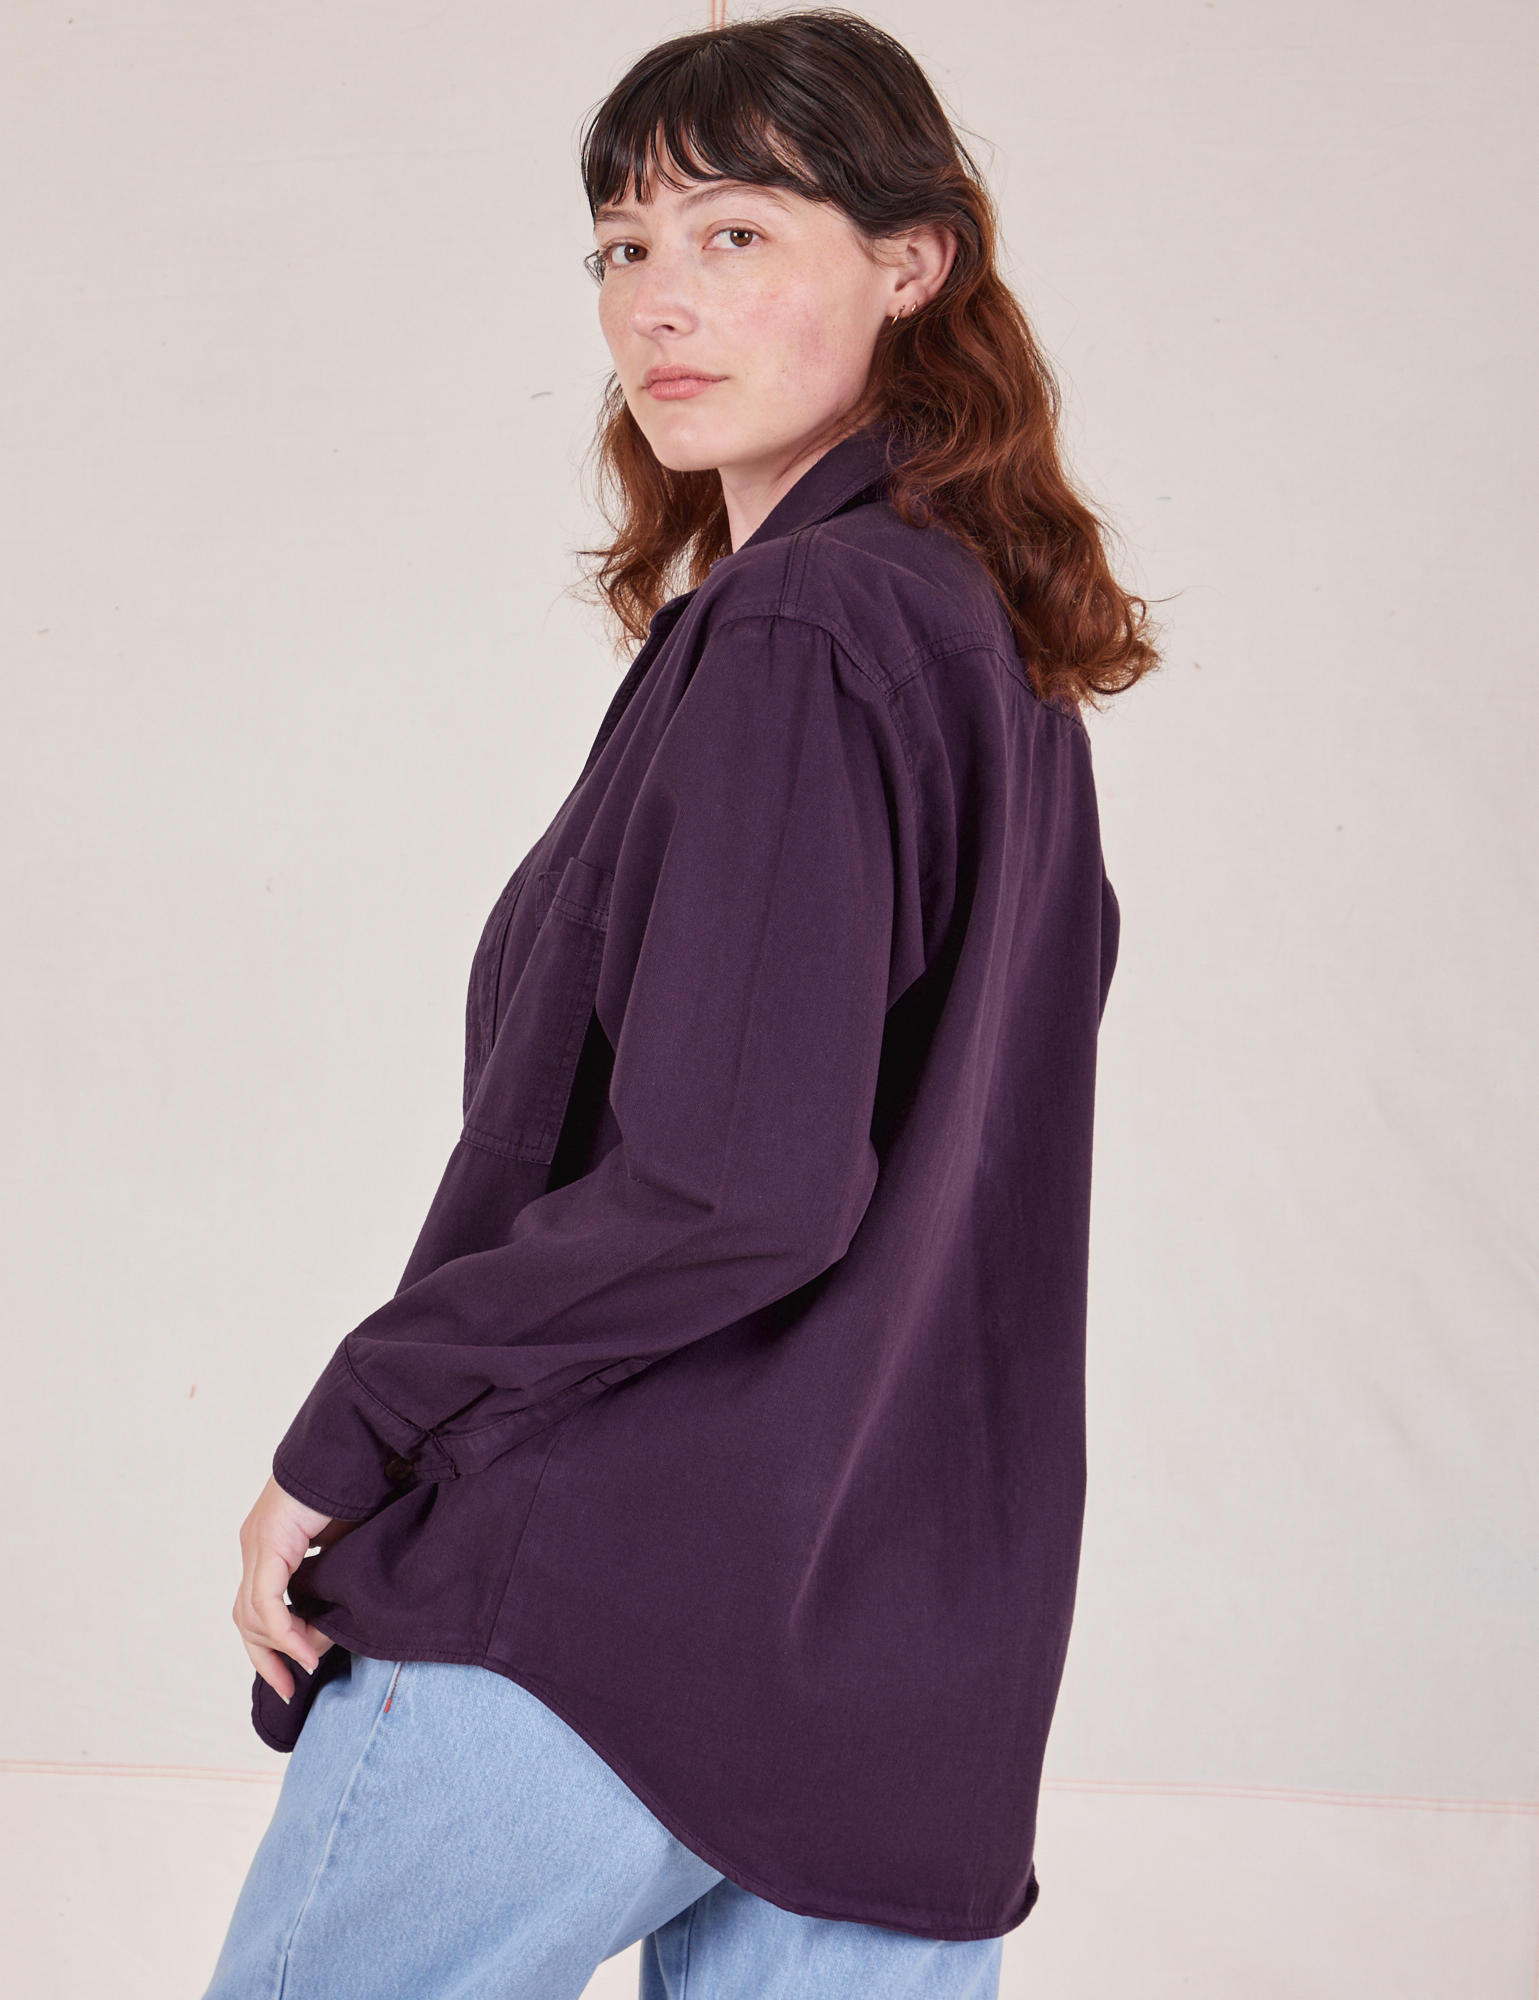 Oversize Overshirt in Nebula Purple side view on Alex